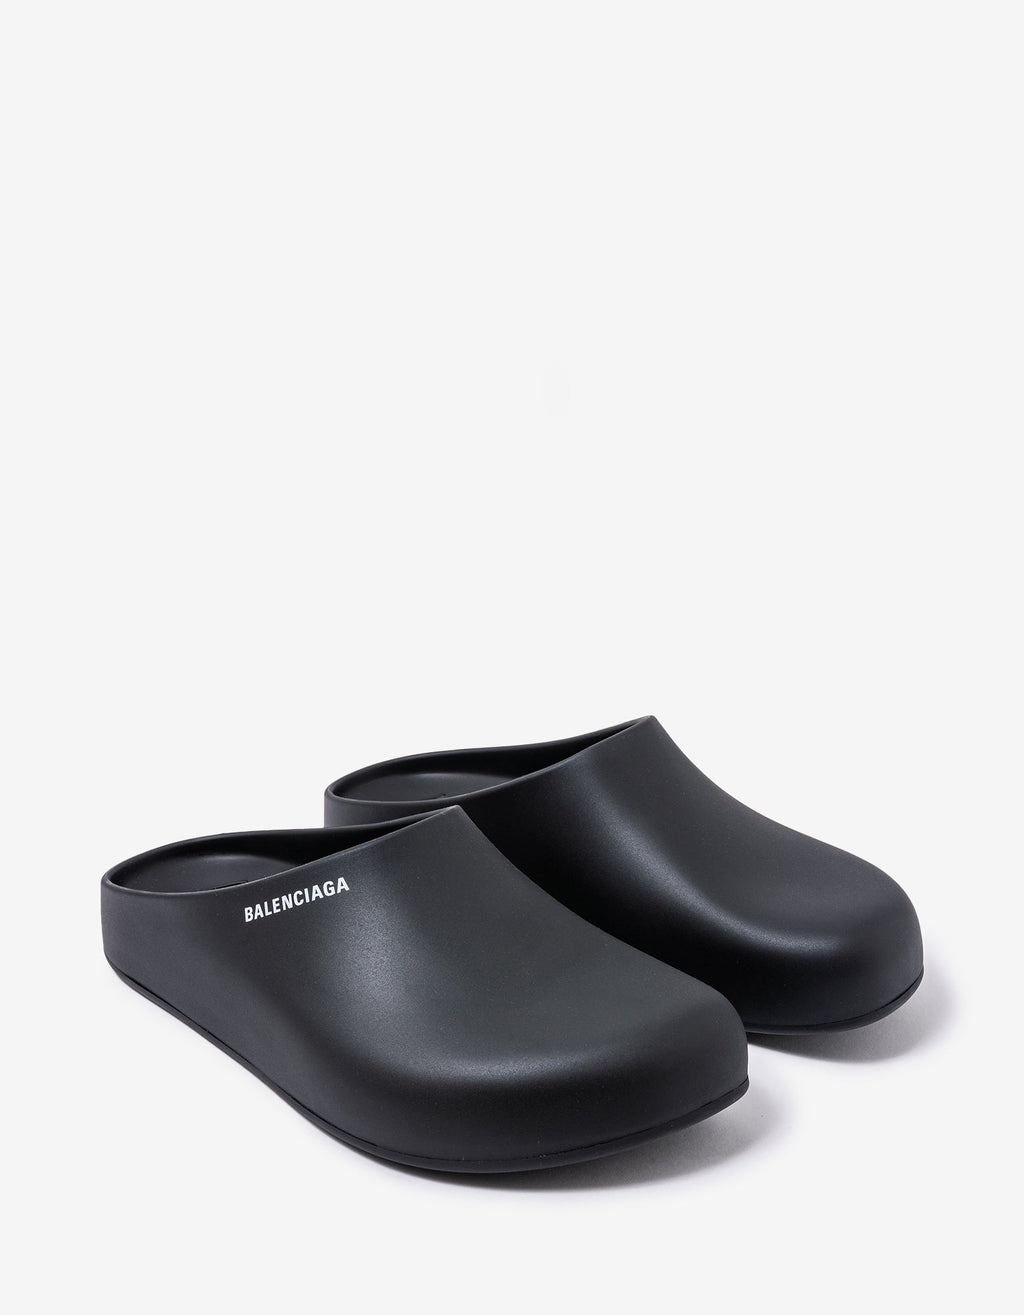 Balenciaga Balenciaga Black Mule Slide Sandals